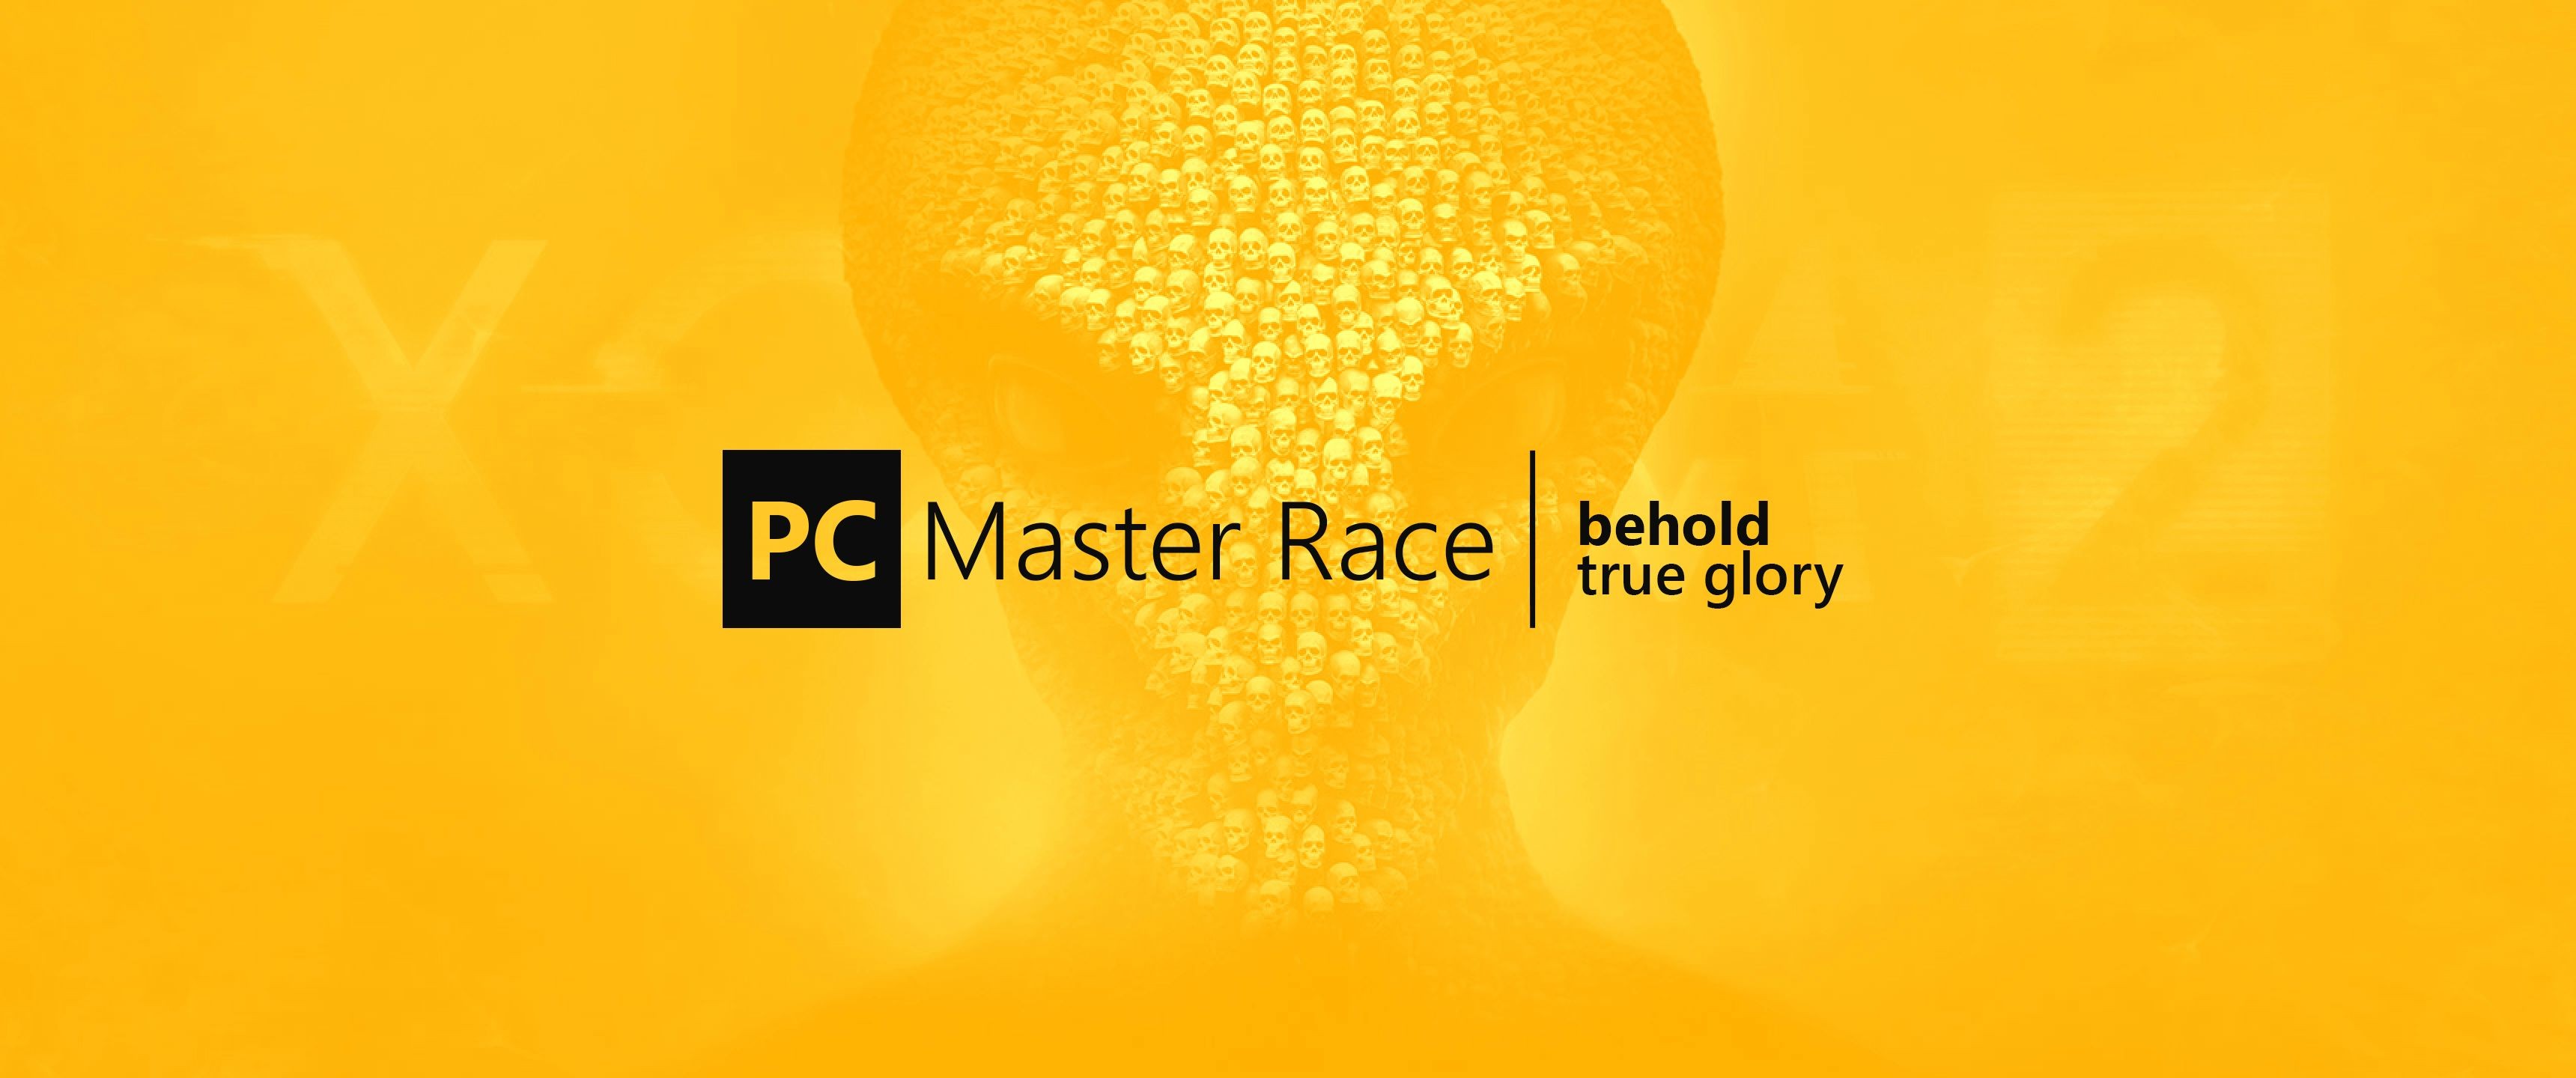 PC Gaming PC Master Race XCOM 2 3440x1440